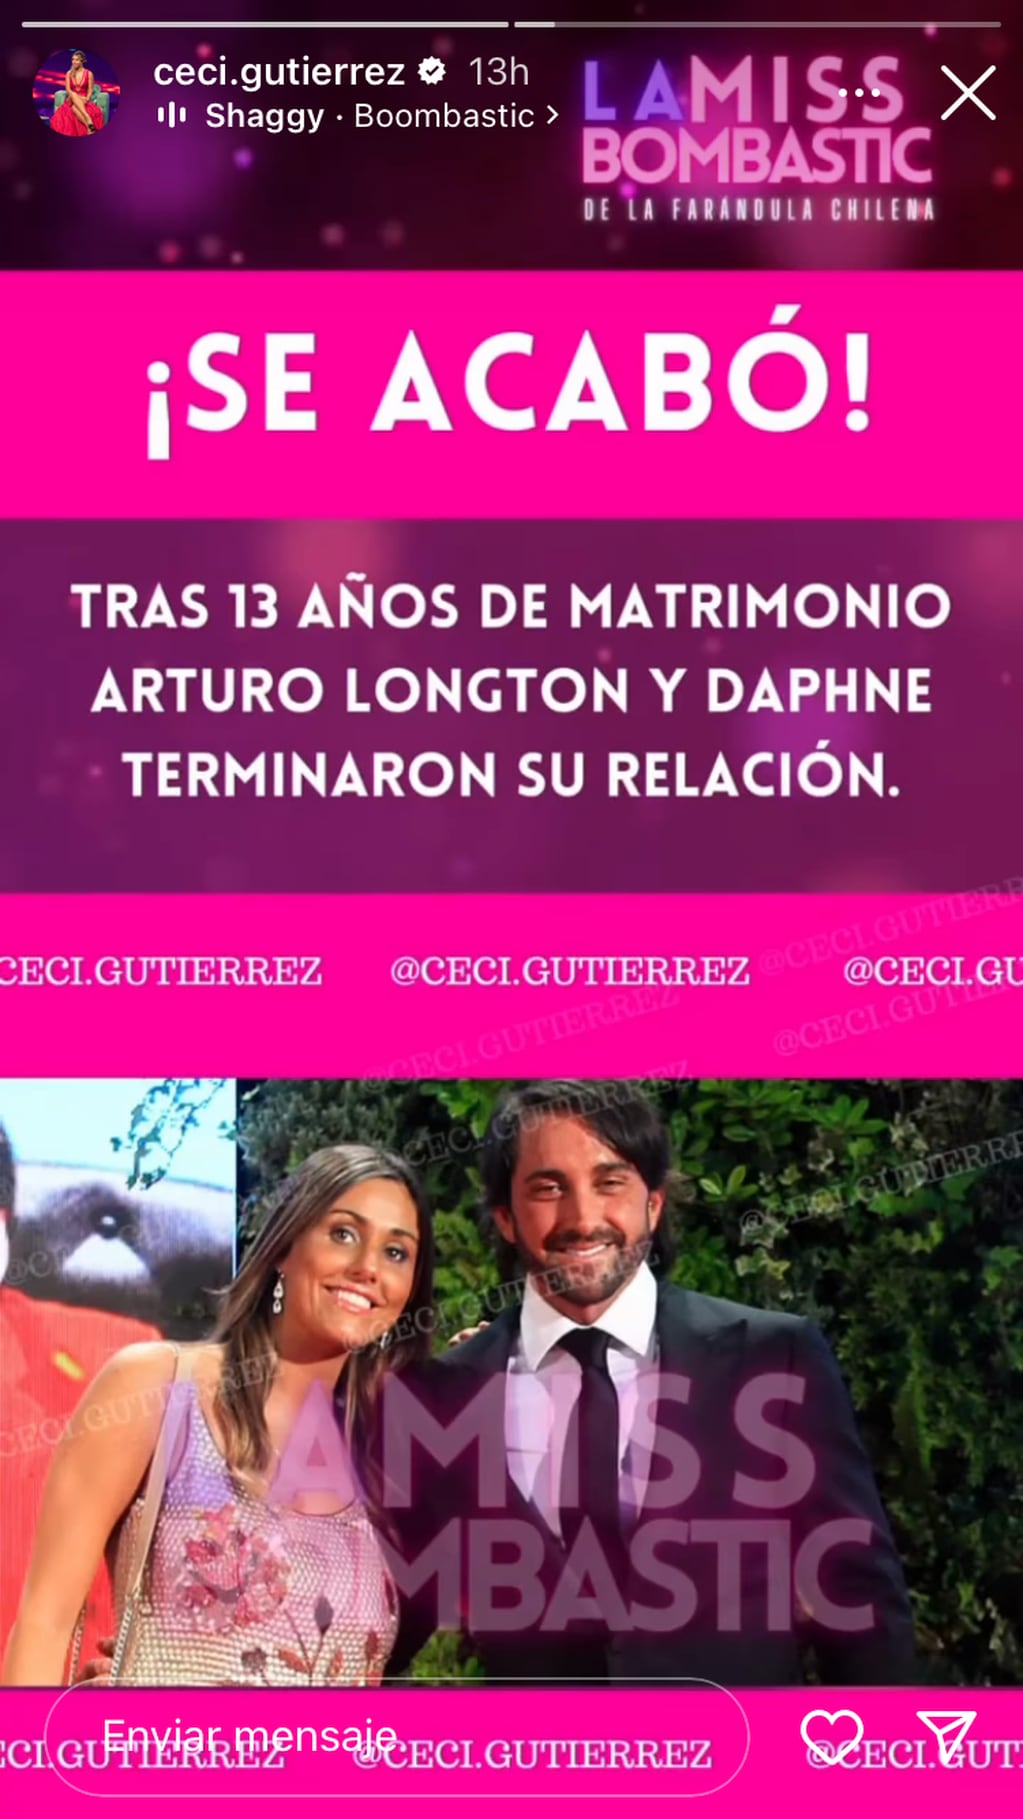 Cecilia Gutiérrez aseguró que Arturo Longton se separó tras 13 años de matrimonio